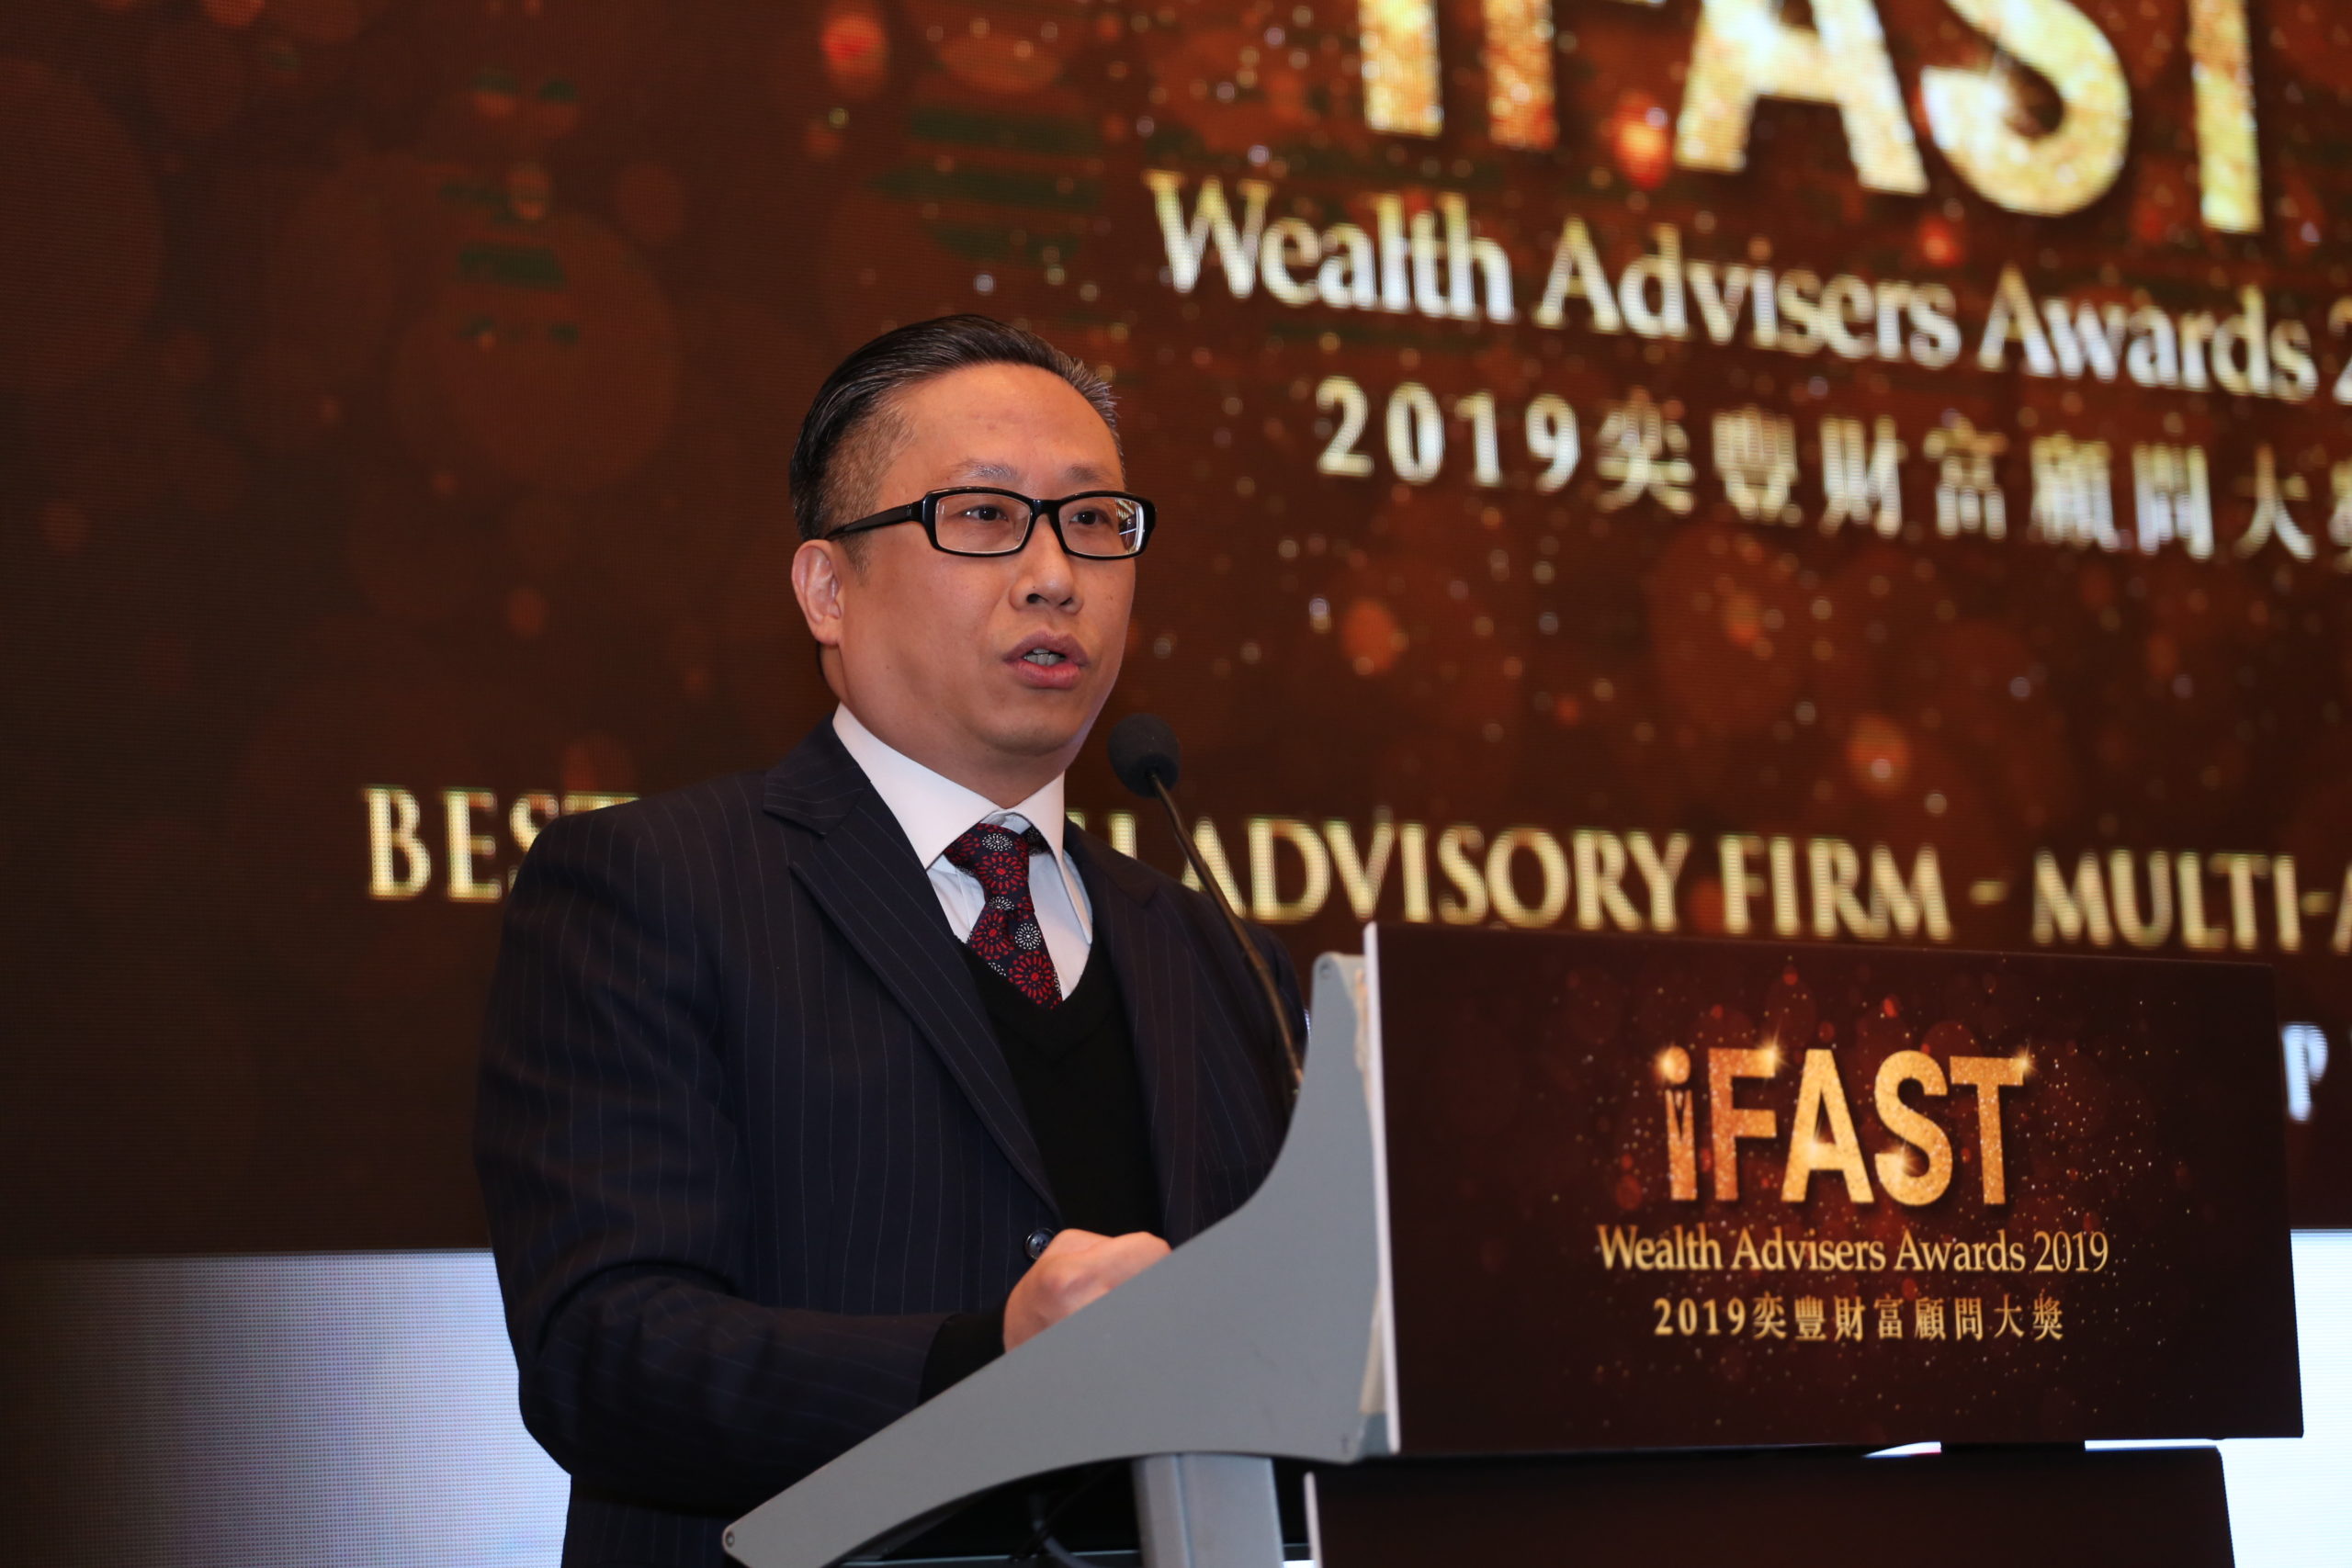 iFAST Wealth Advisers Awards 2019<br> - Multi-Asset Allocator